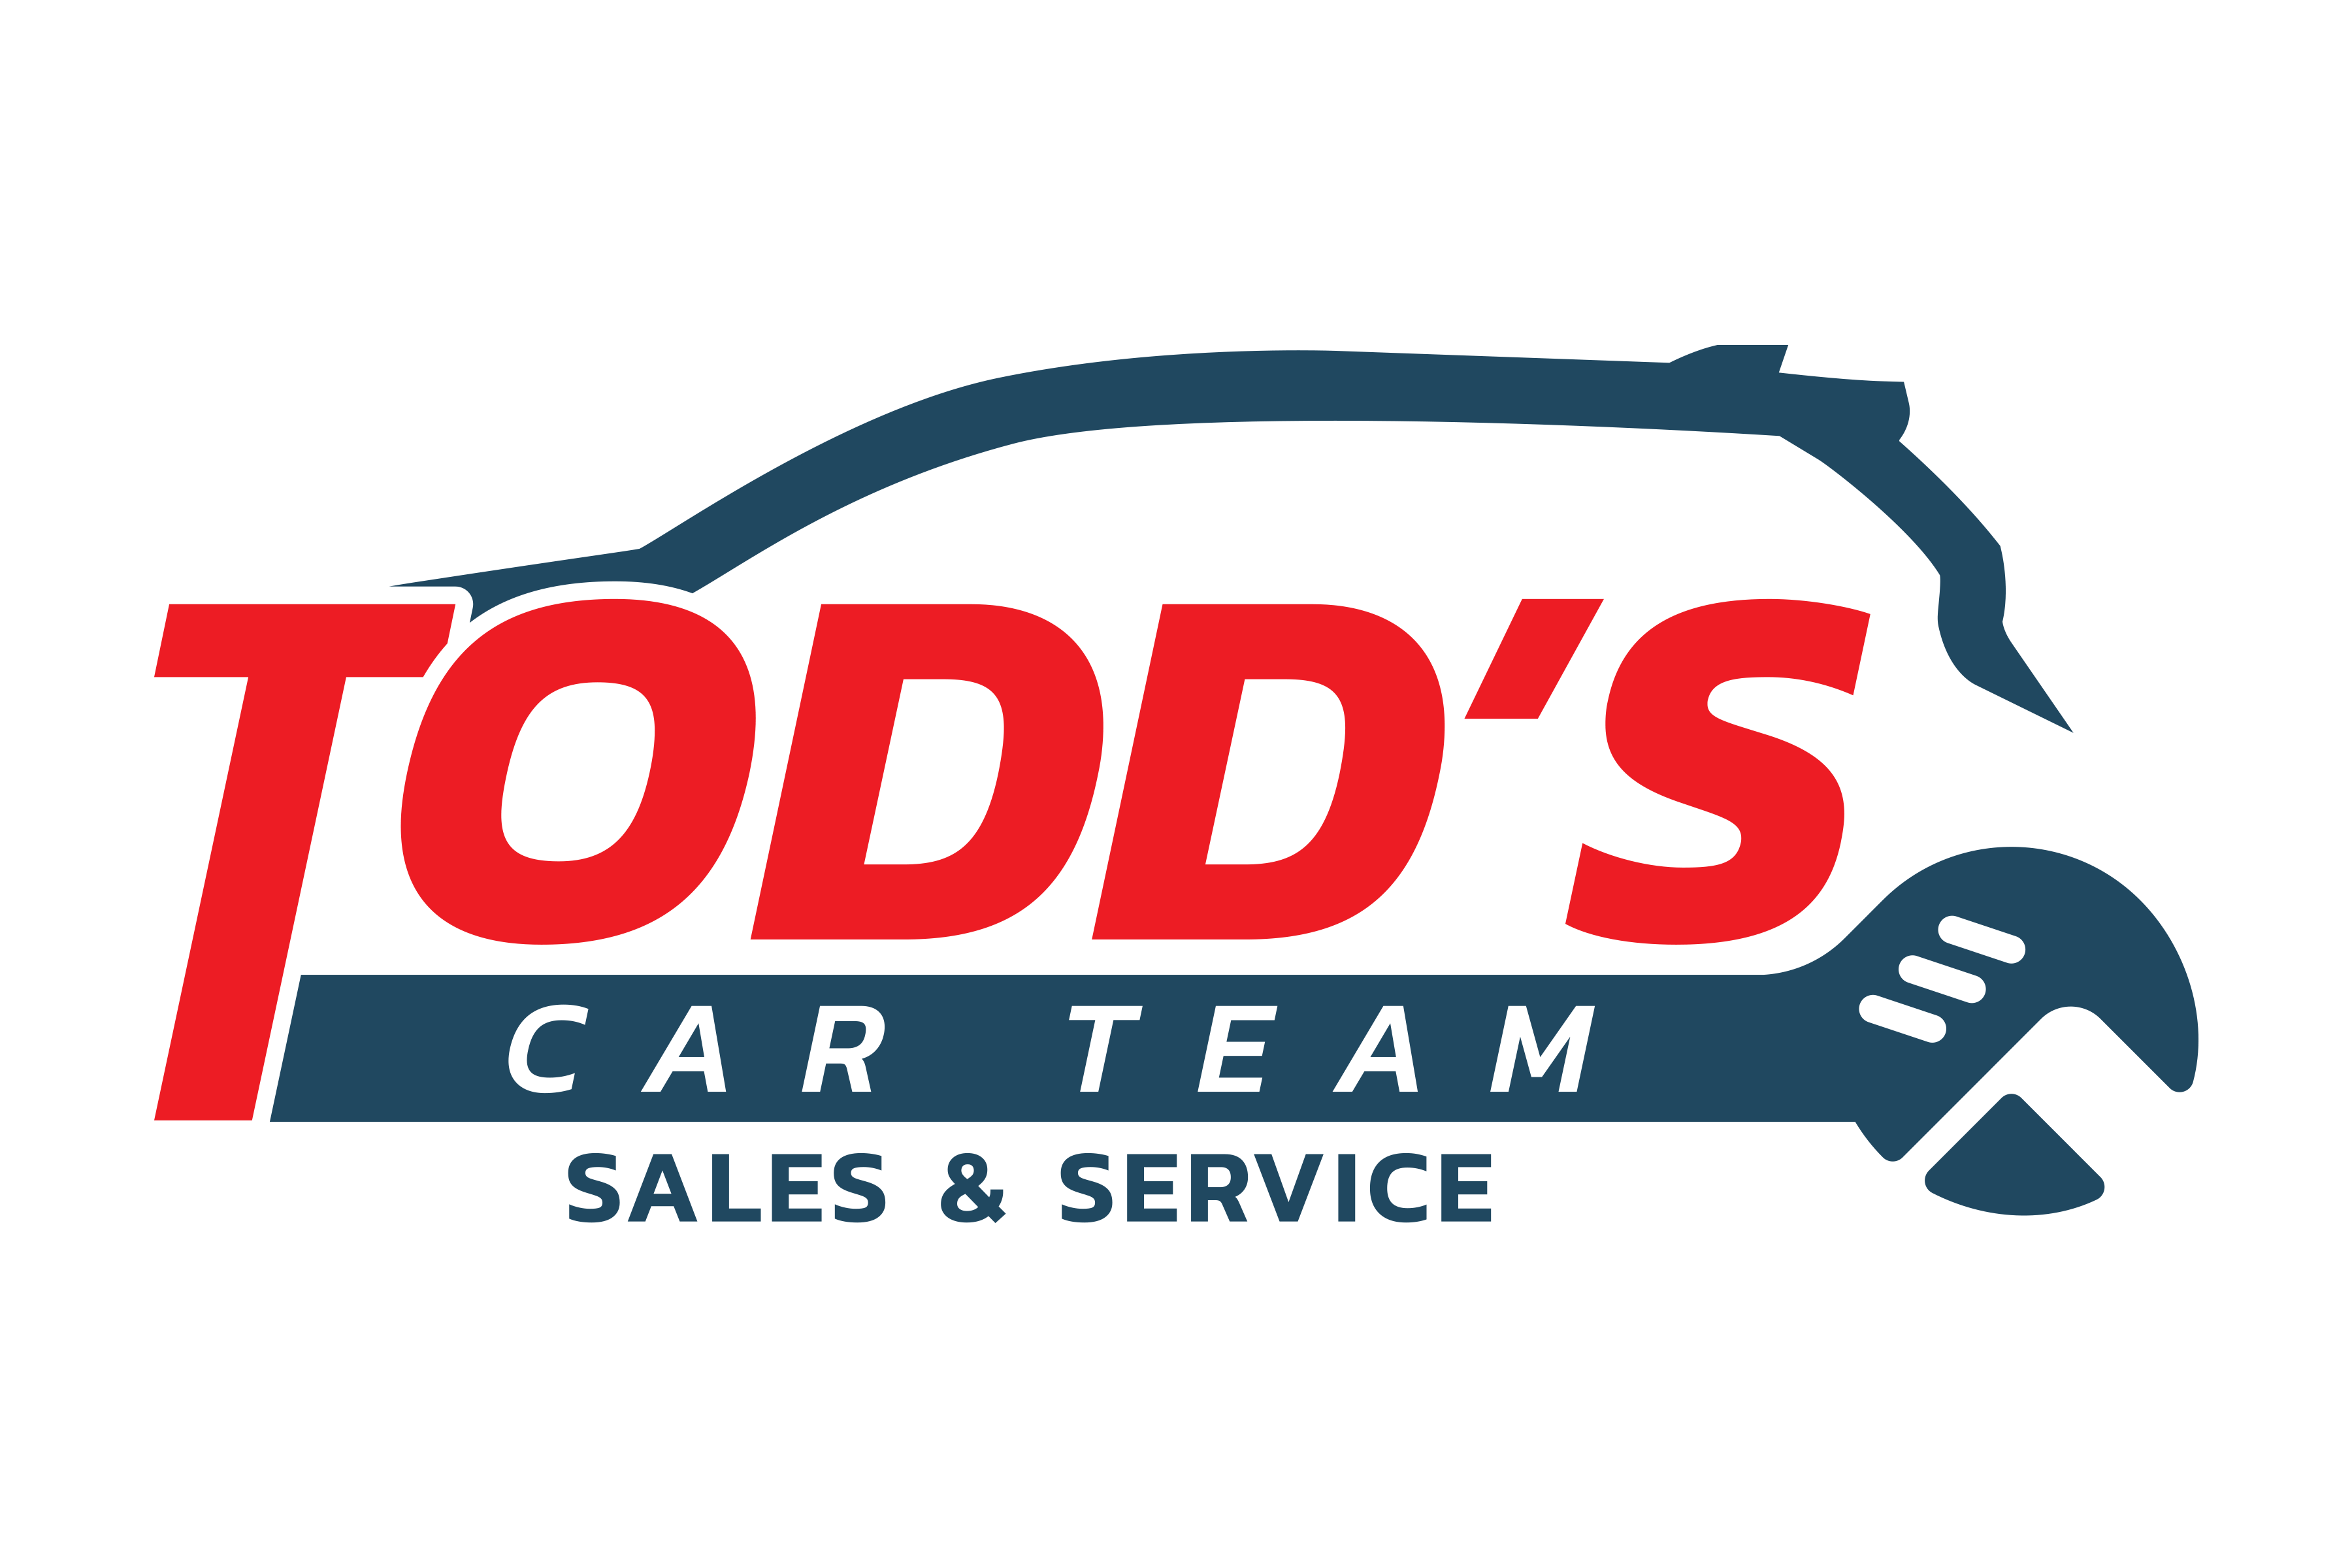 Todd's Car Team